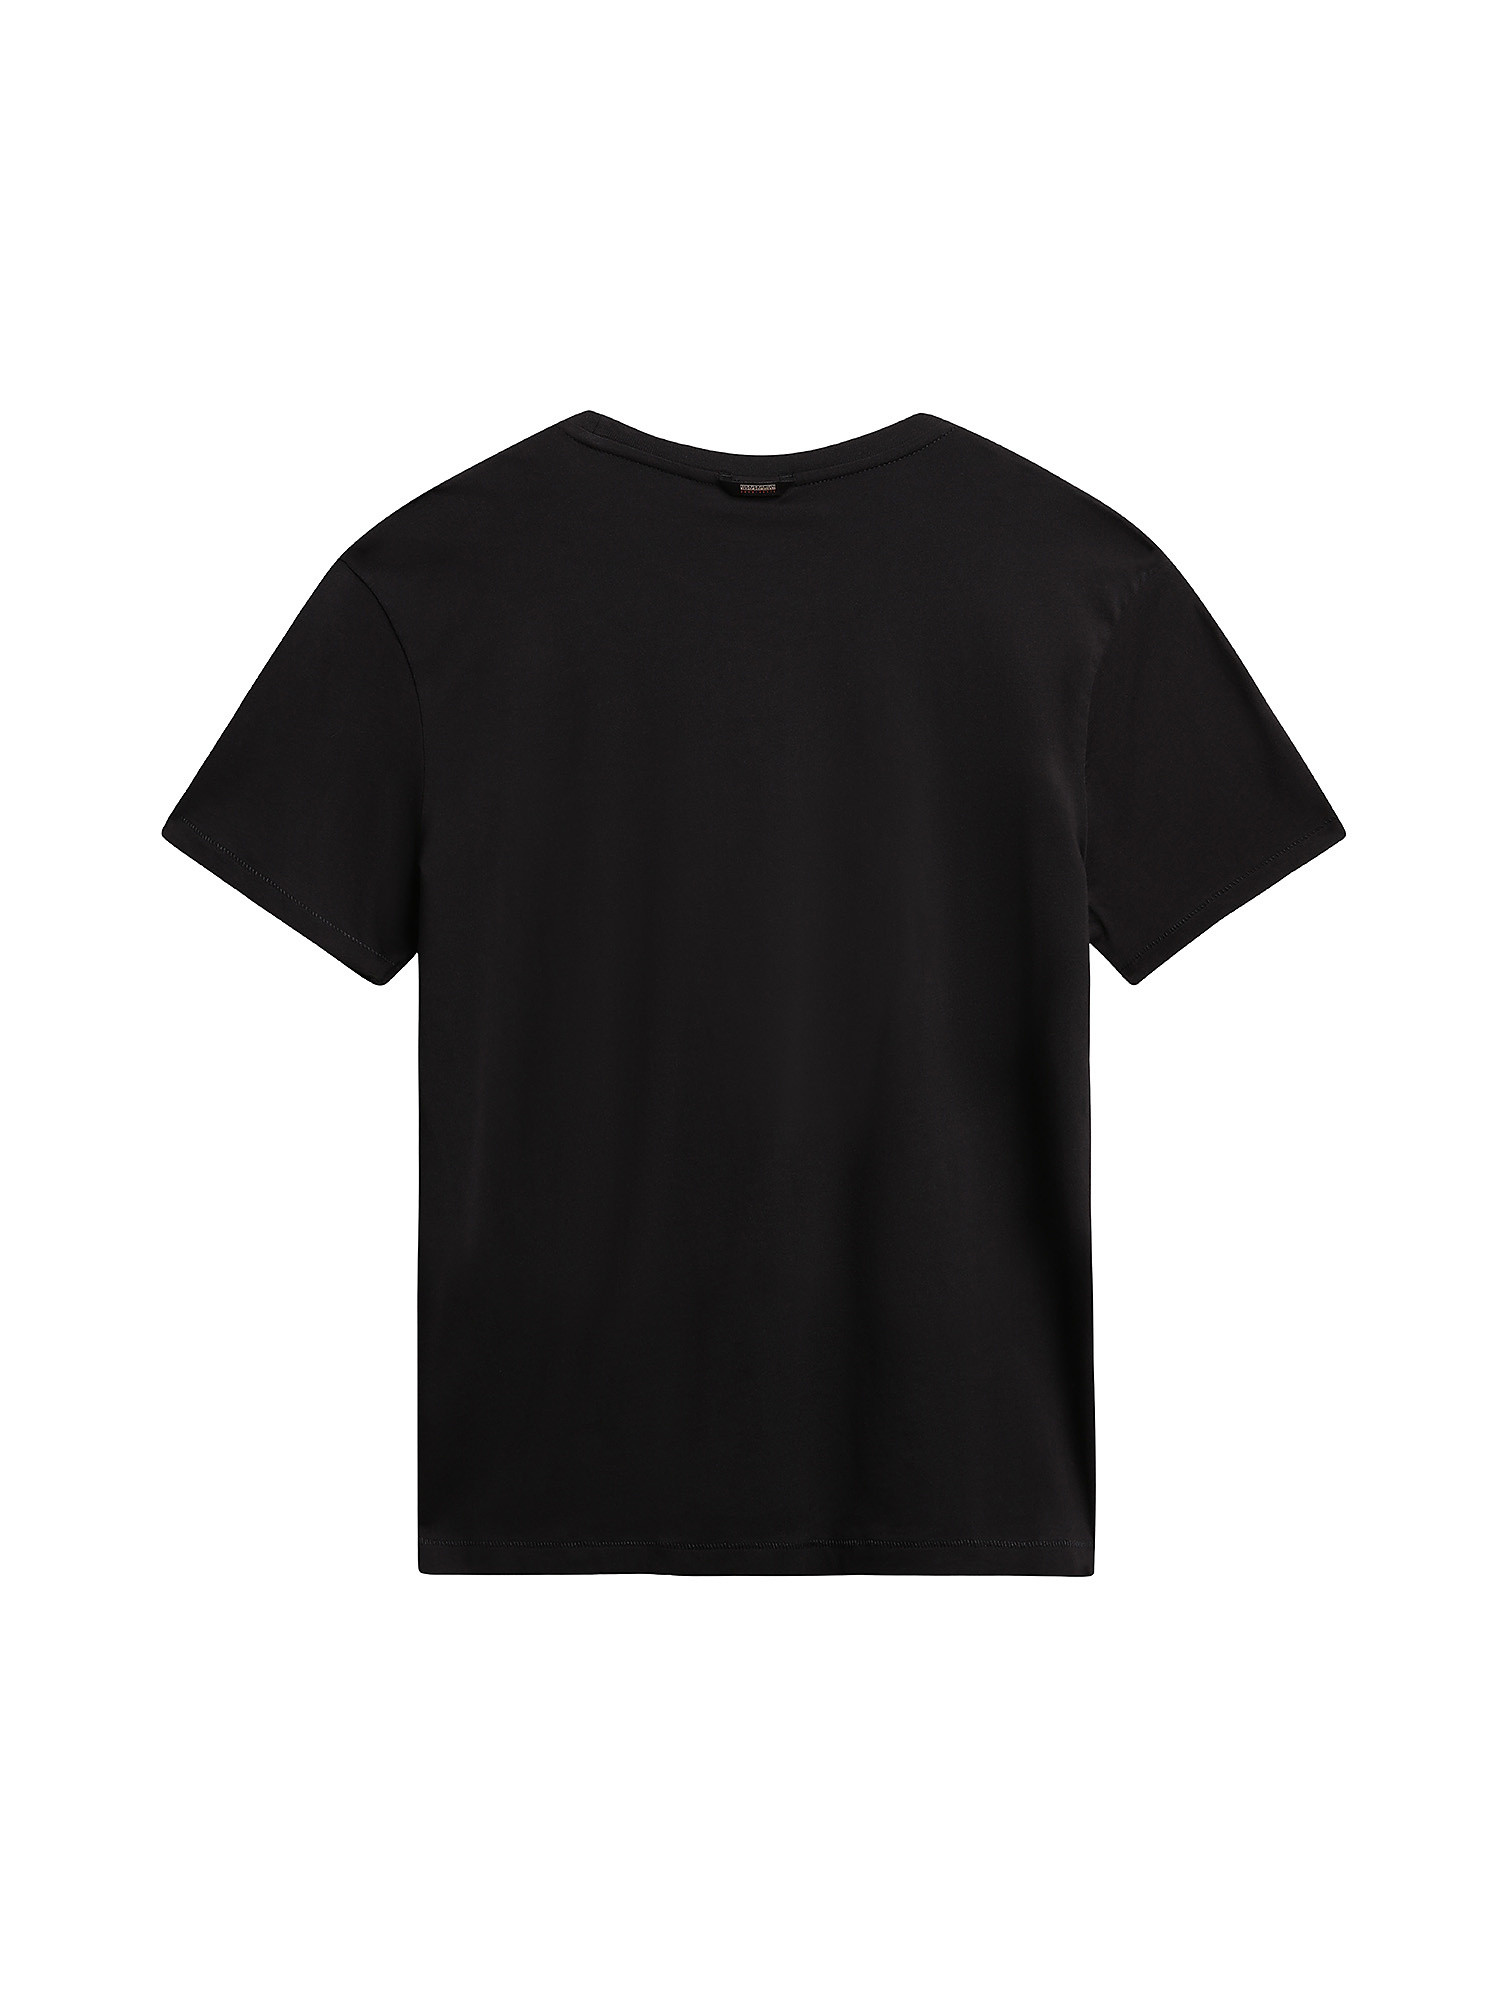 Short Sleeve T-Shirt Turin, Black, large image number 1